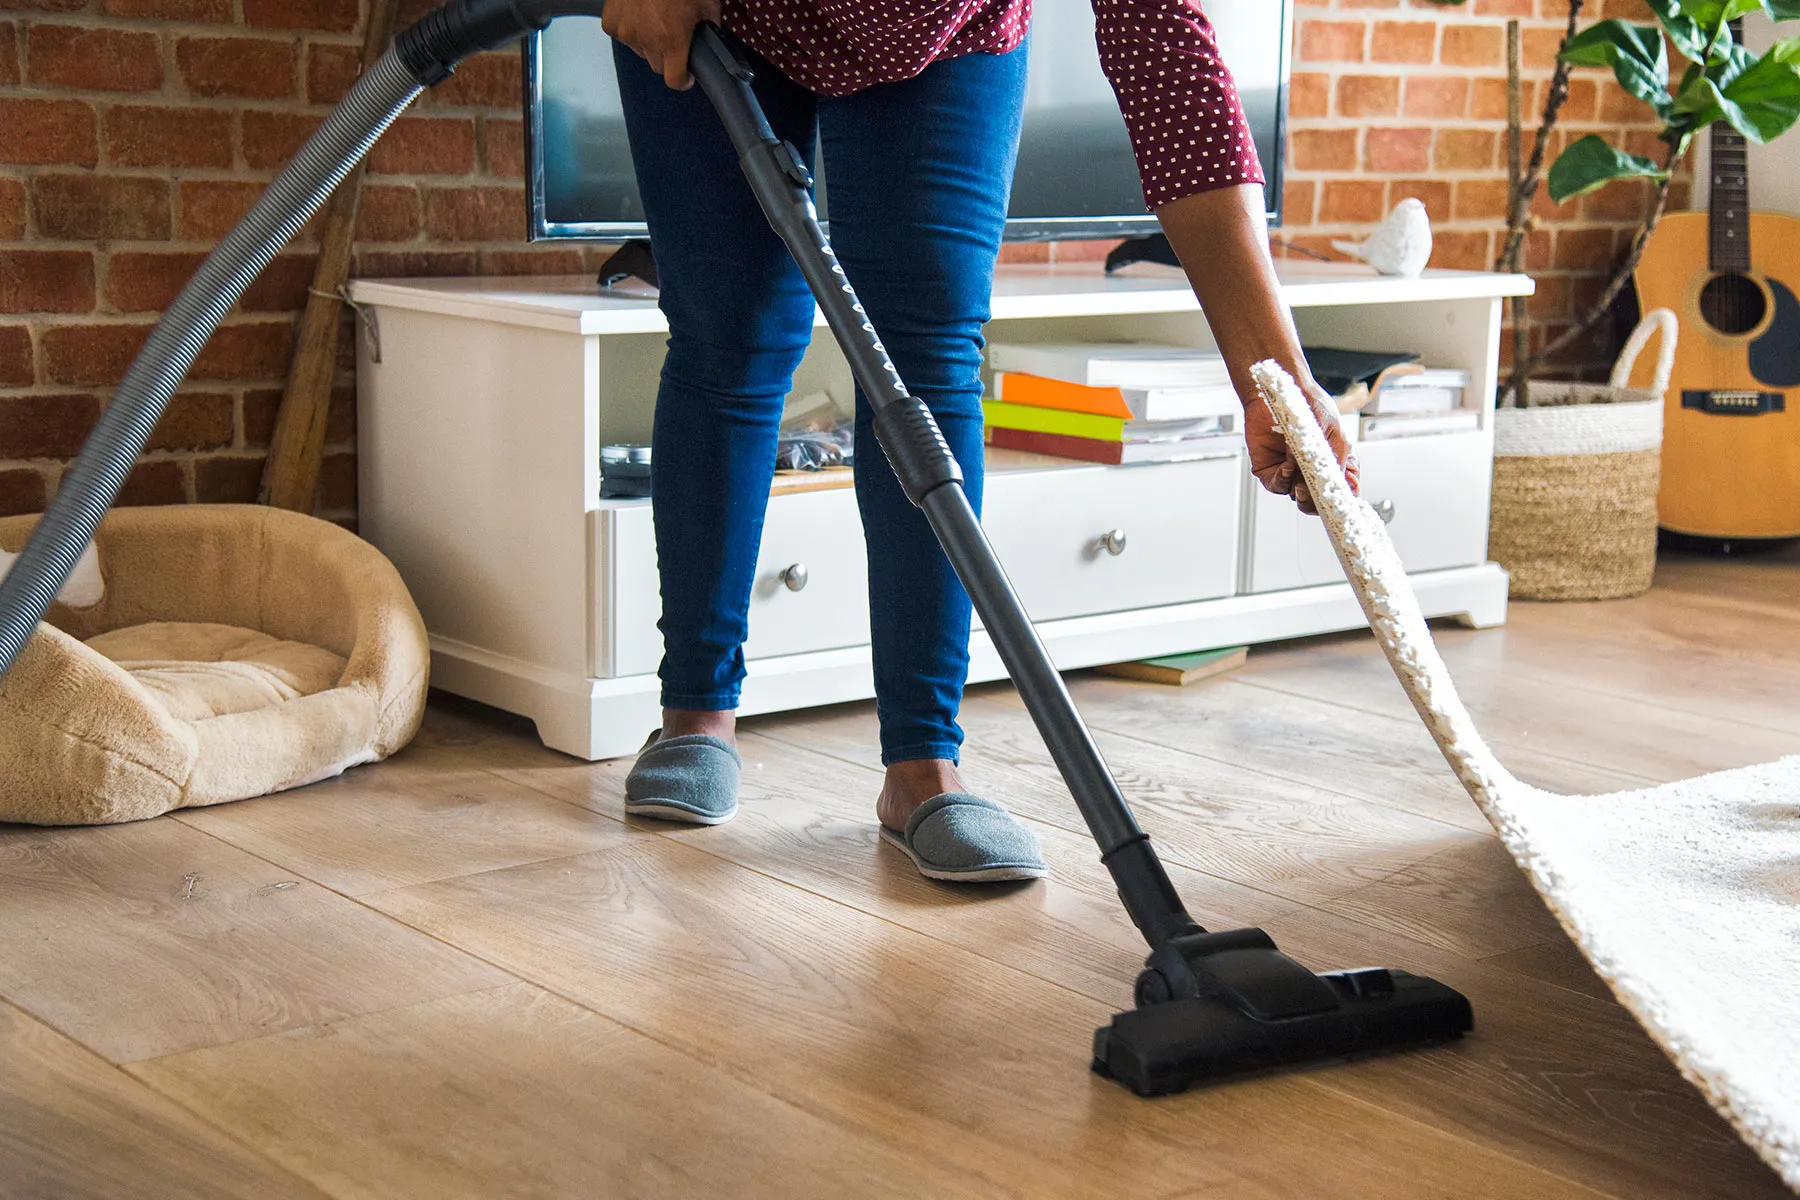 photo of woman vacuuming floor